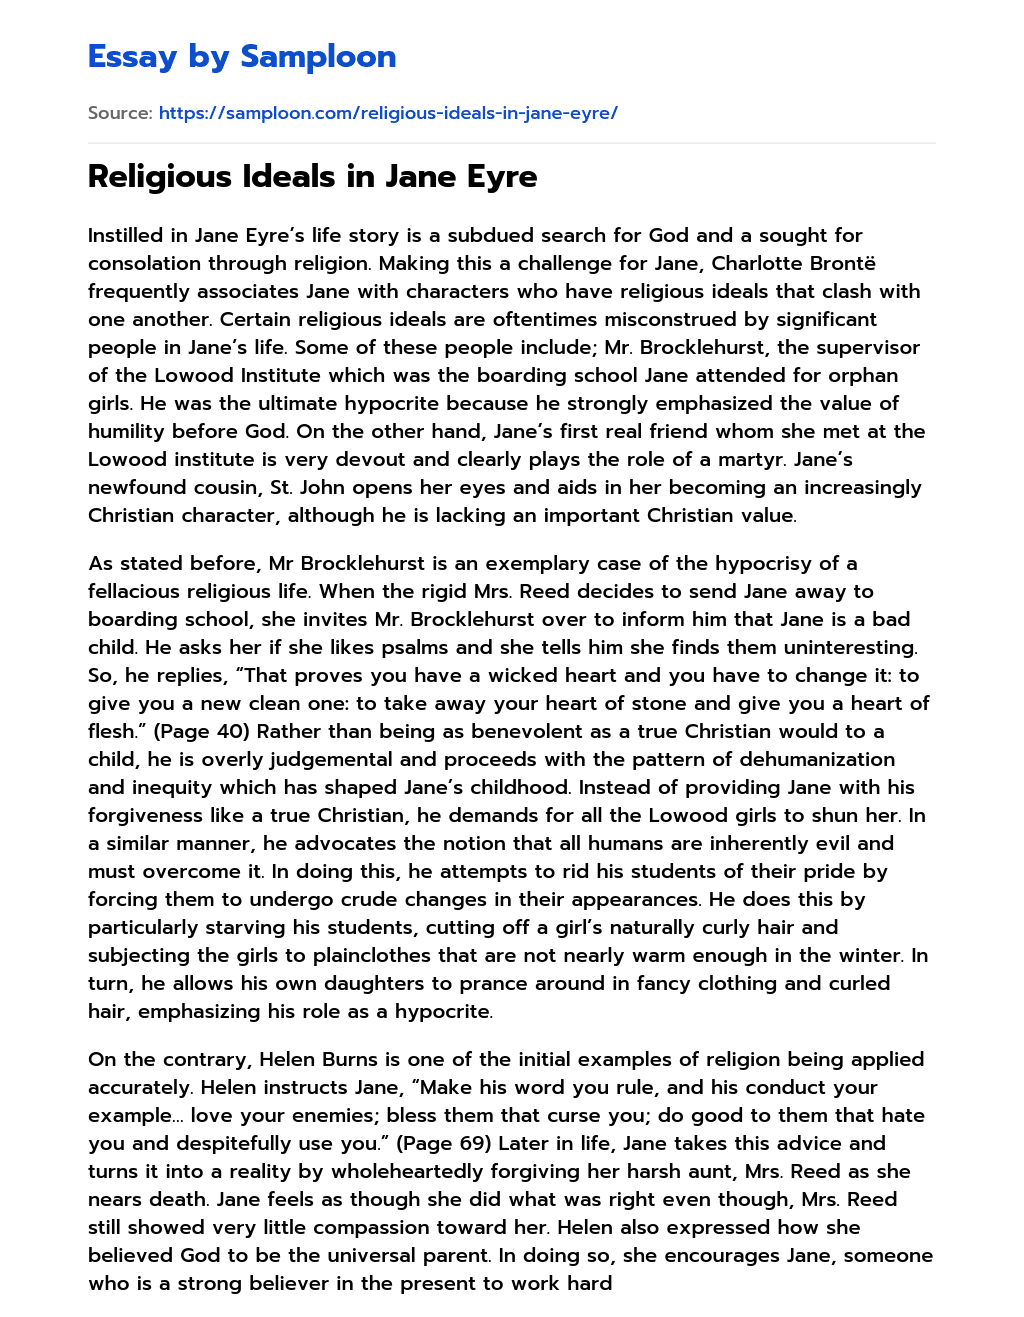 Religious Ideals in Jane Eyre essay